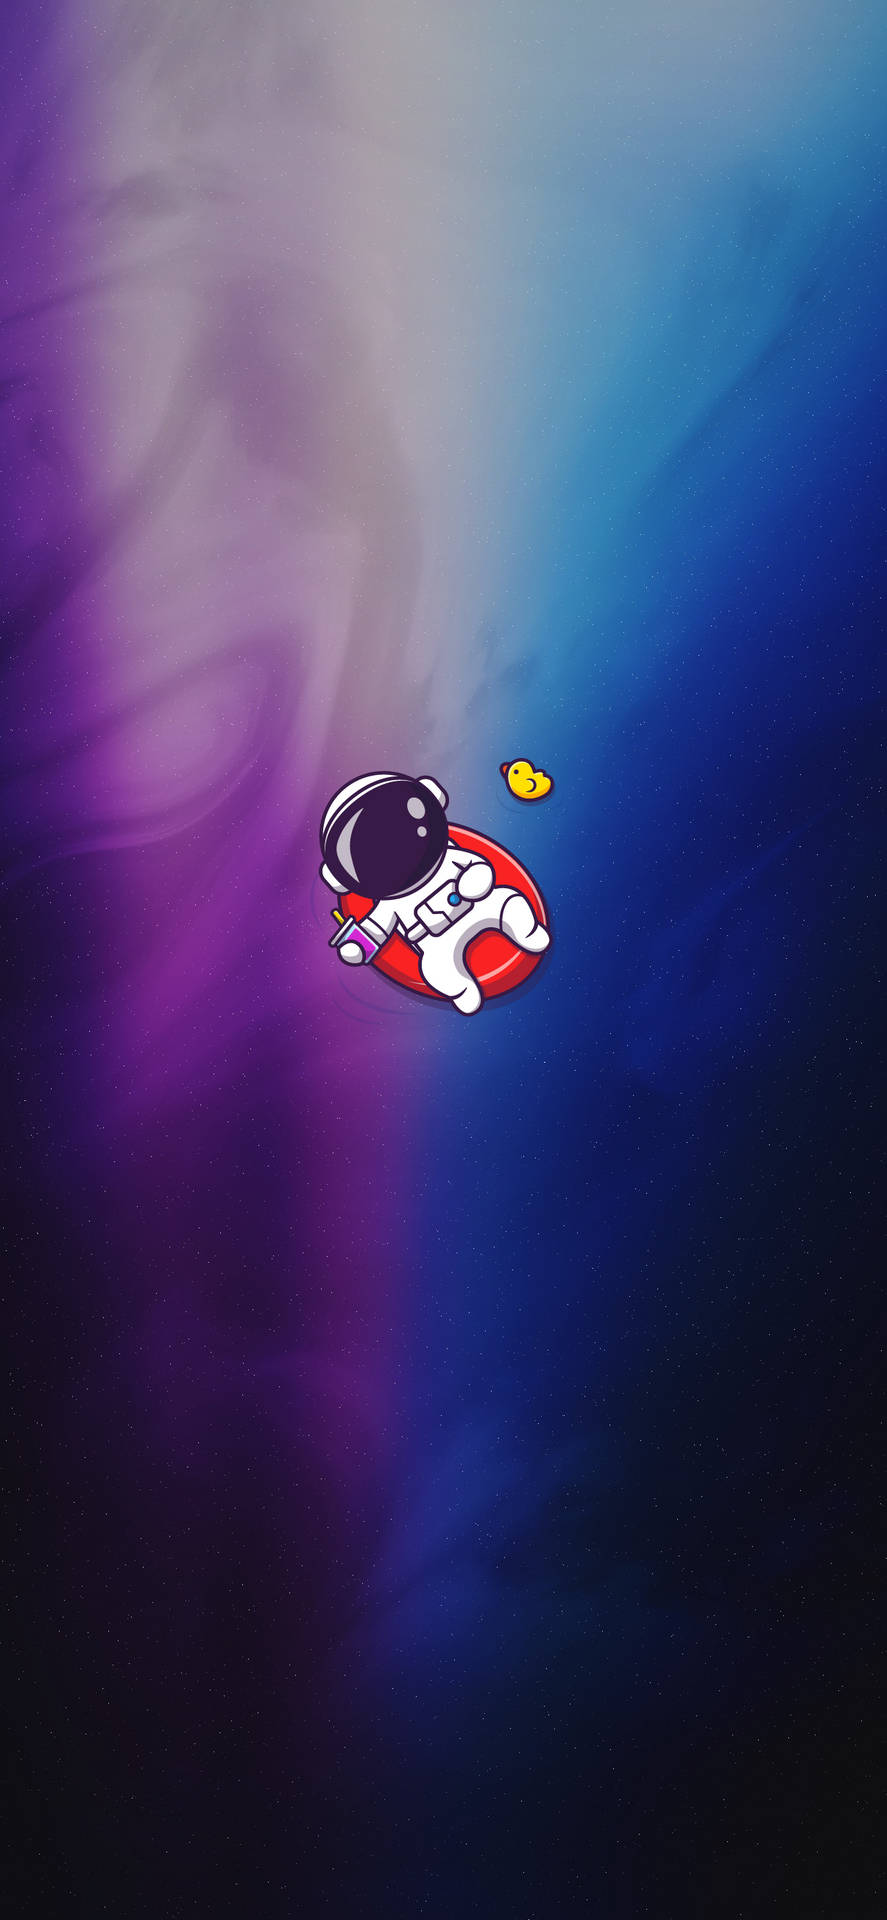 Cartoon Astronaut On A Life Preserver Wallpaper